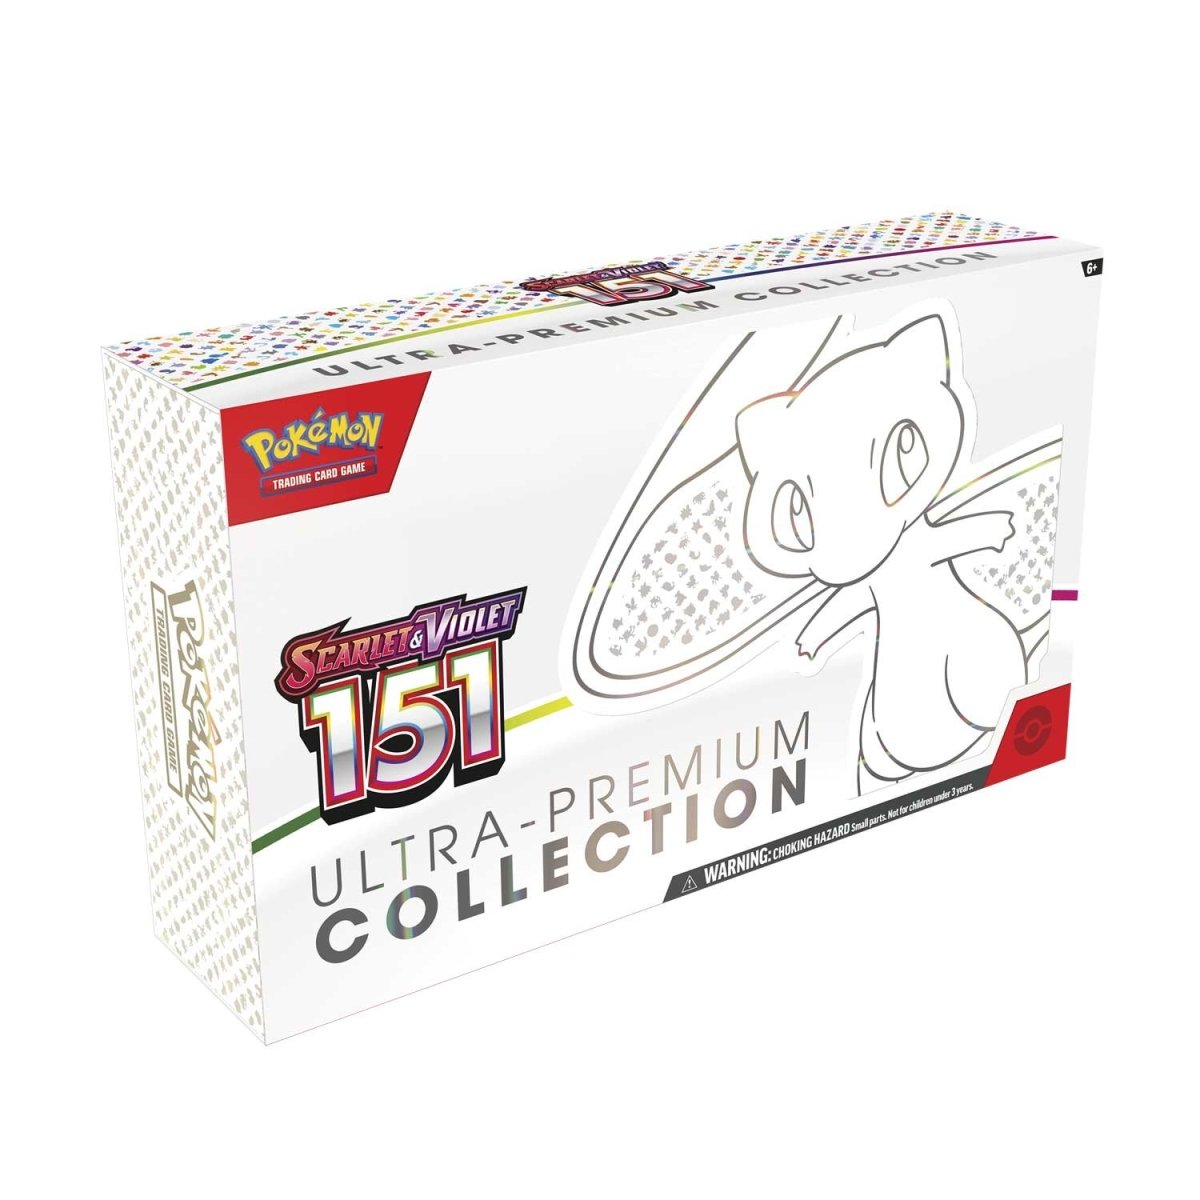 Pokémon Scarlet & Violet-151 Ultra-Premium Collection